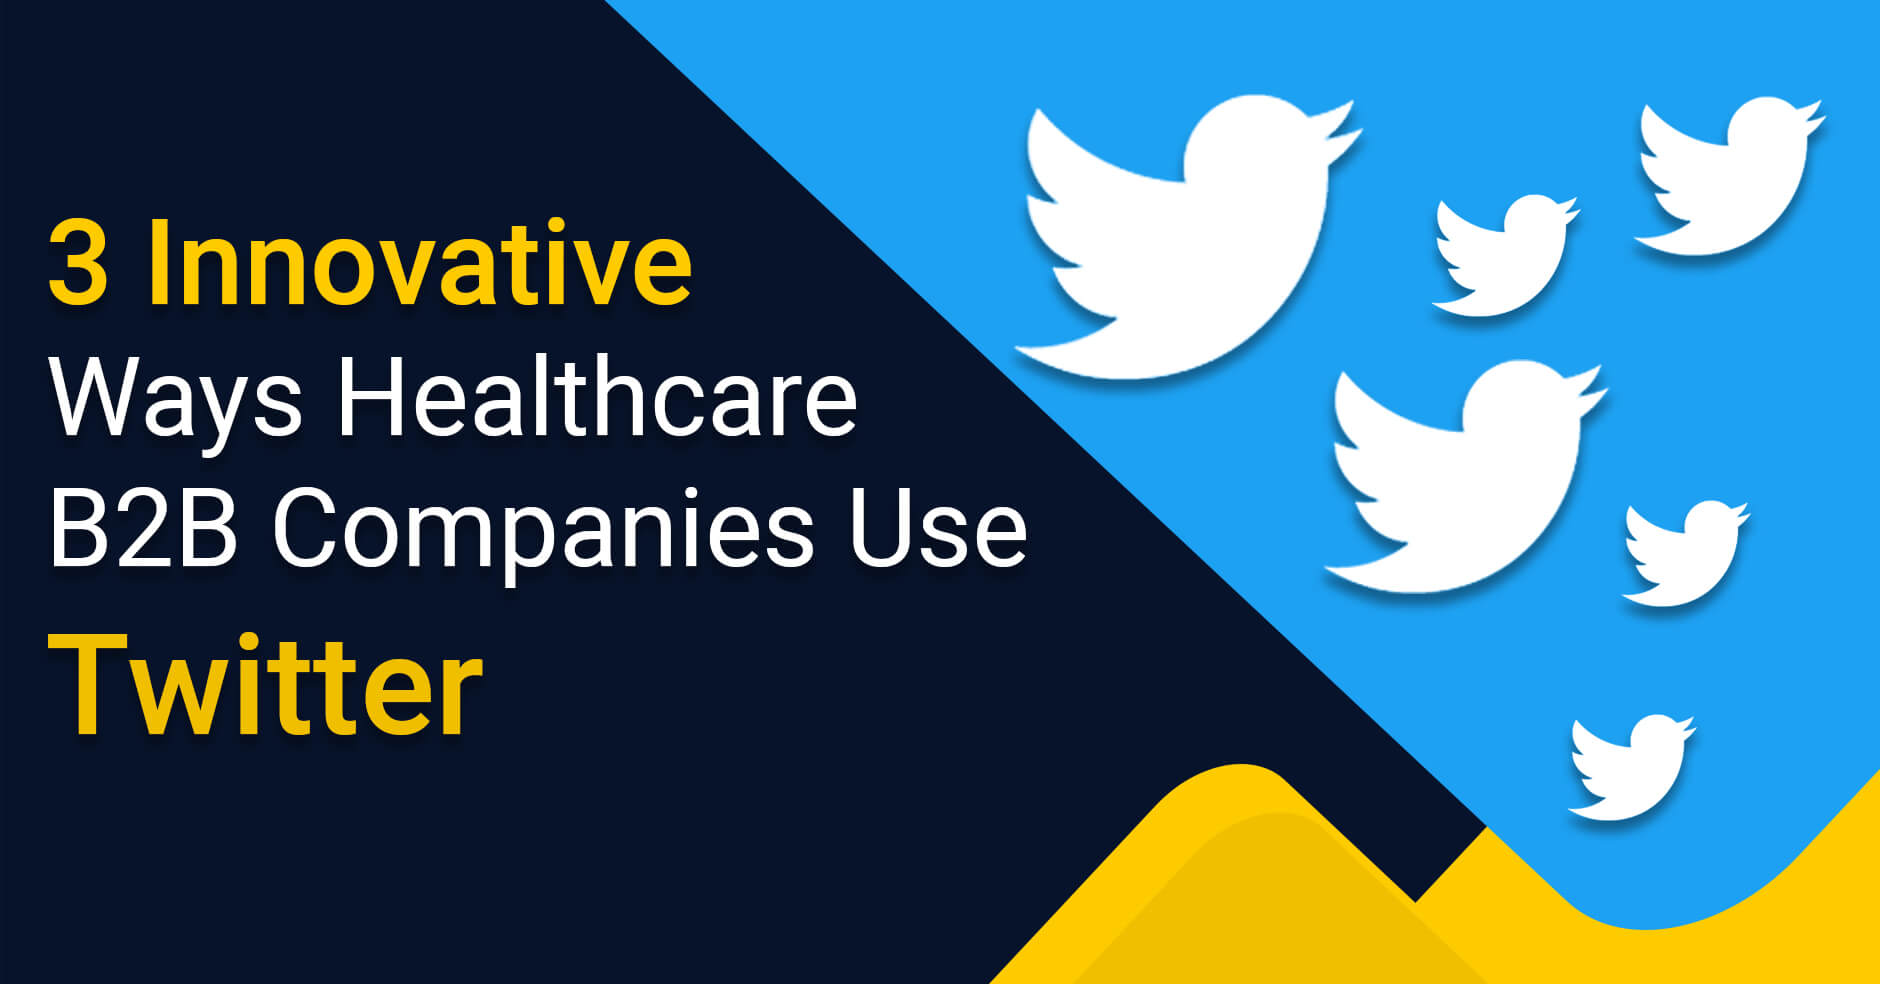 3 Innovative Ways Healthcare B2B Companies Use Twitter